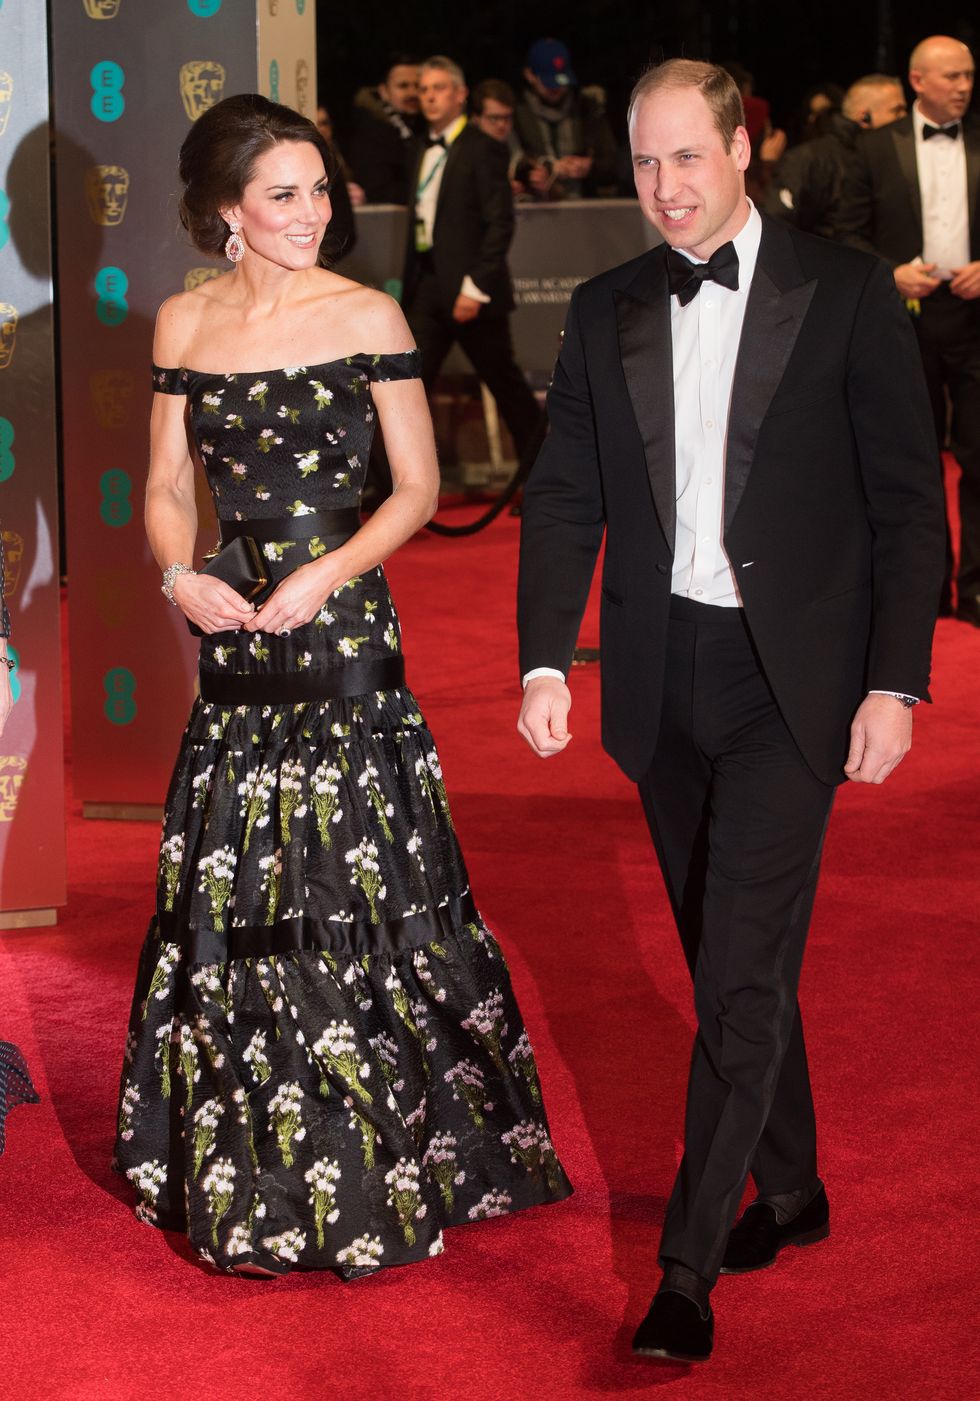 ee british academy film awards red carpet arrivals